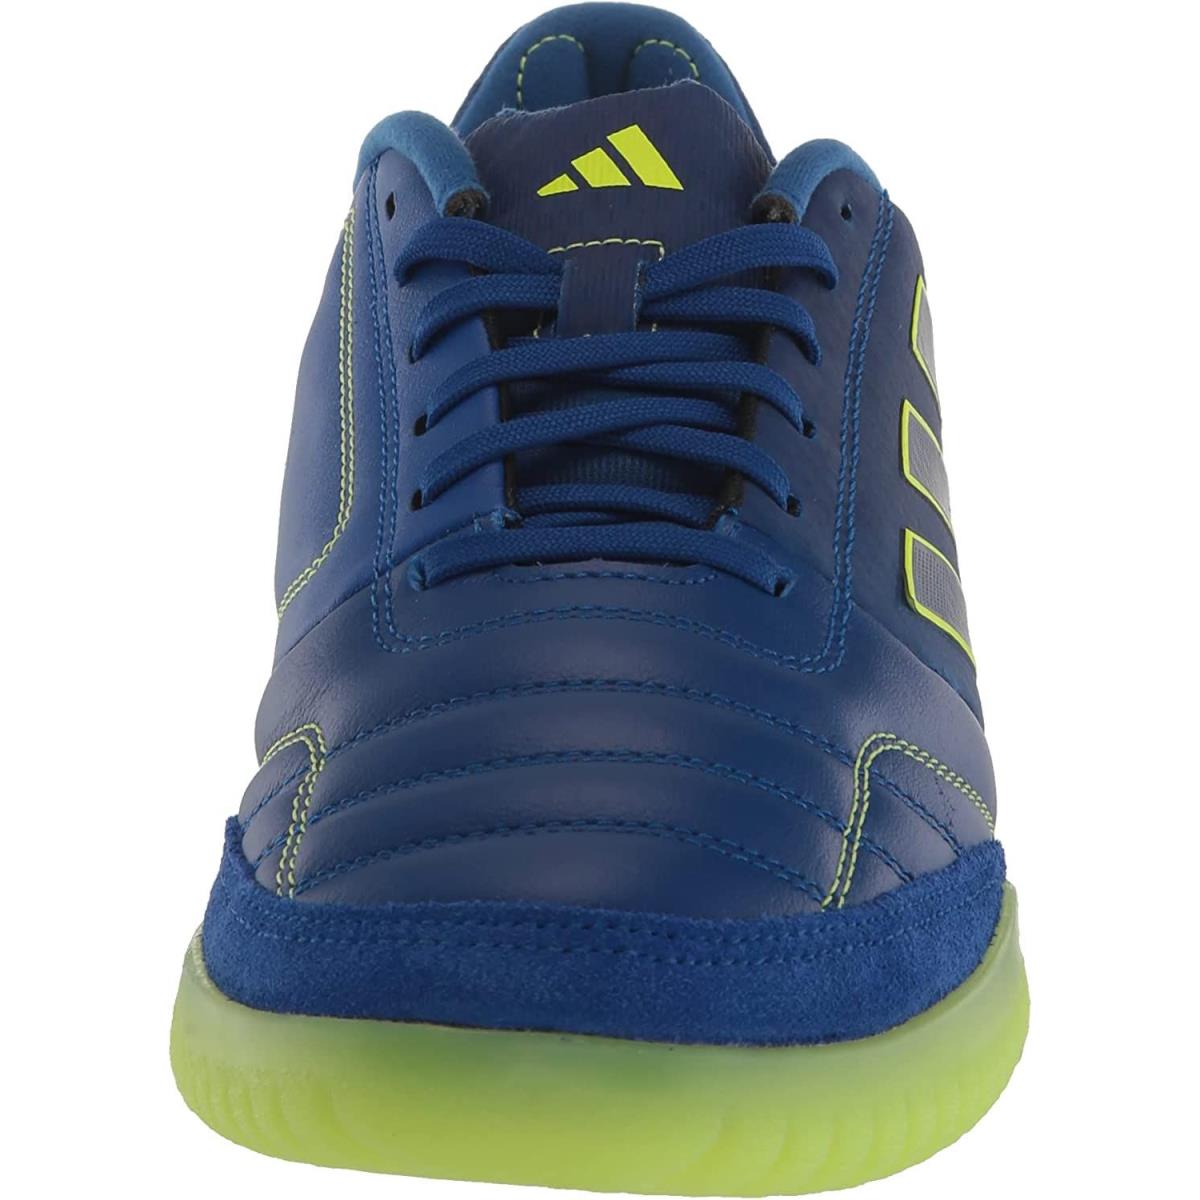 Adidas Unisex-adult Top Sala Indoor Soccer Shoe